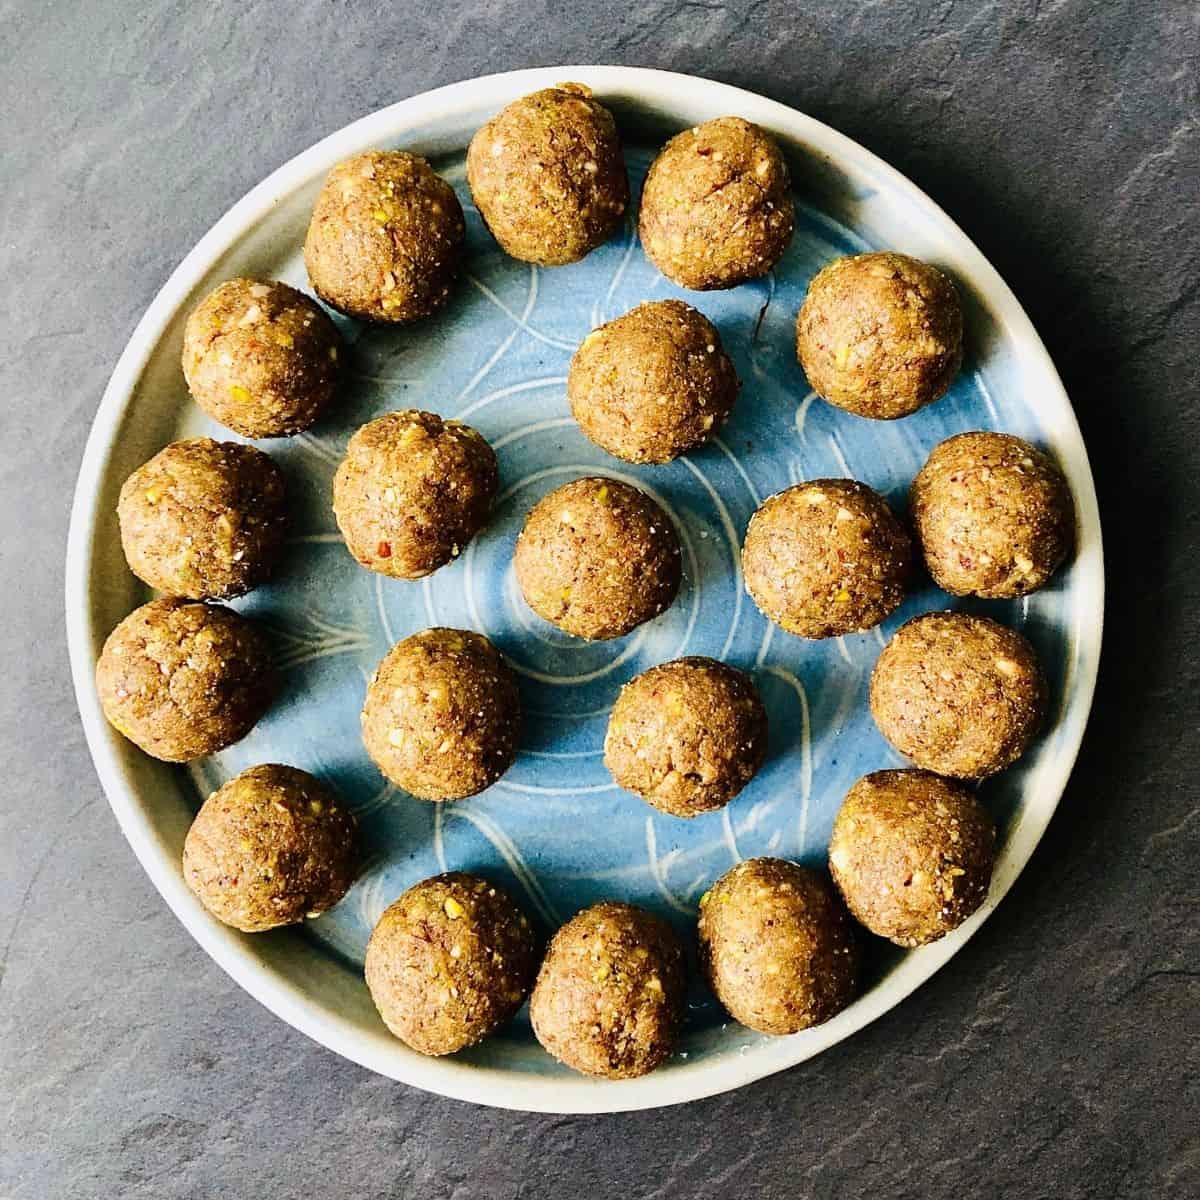 Twenty balls of thundai bliss ball mixture on a plate